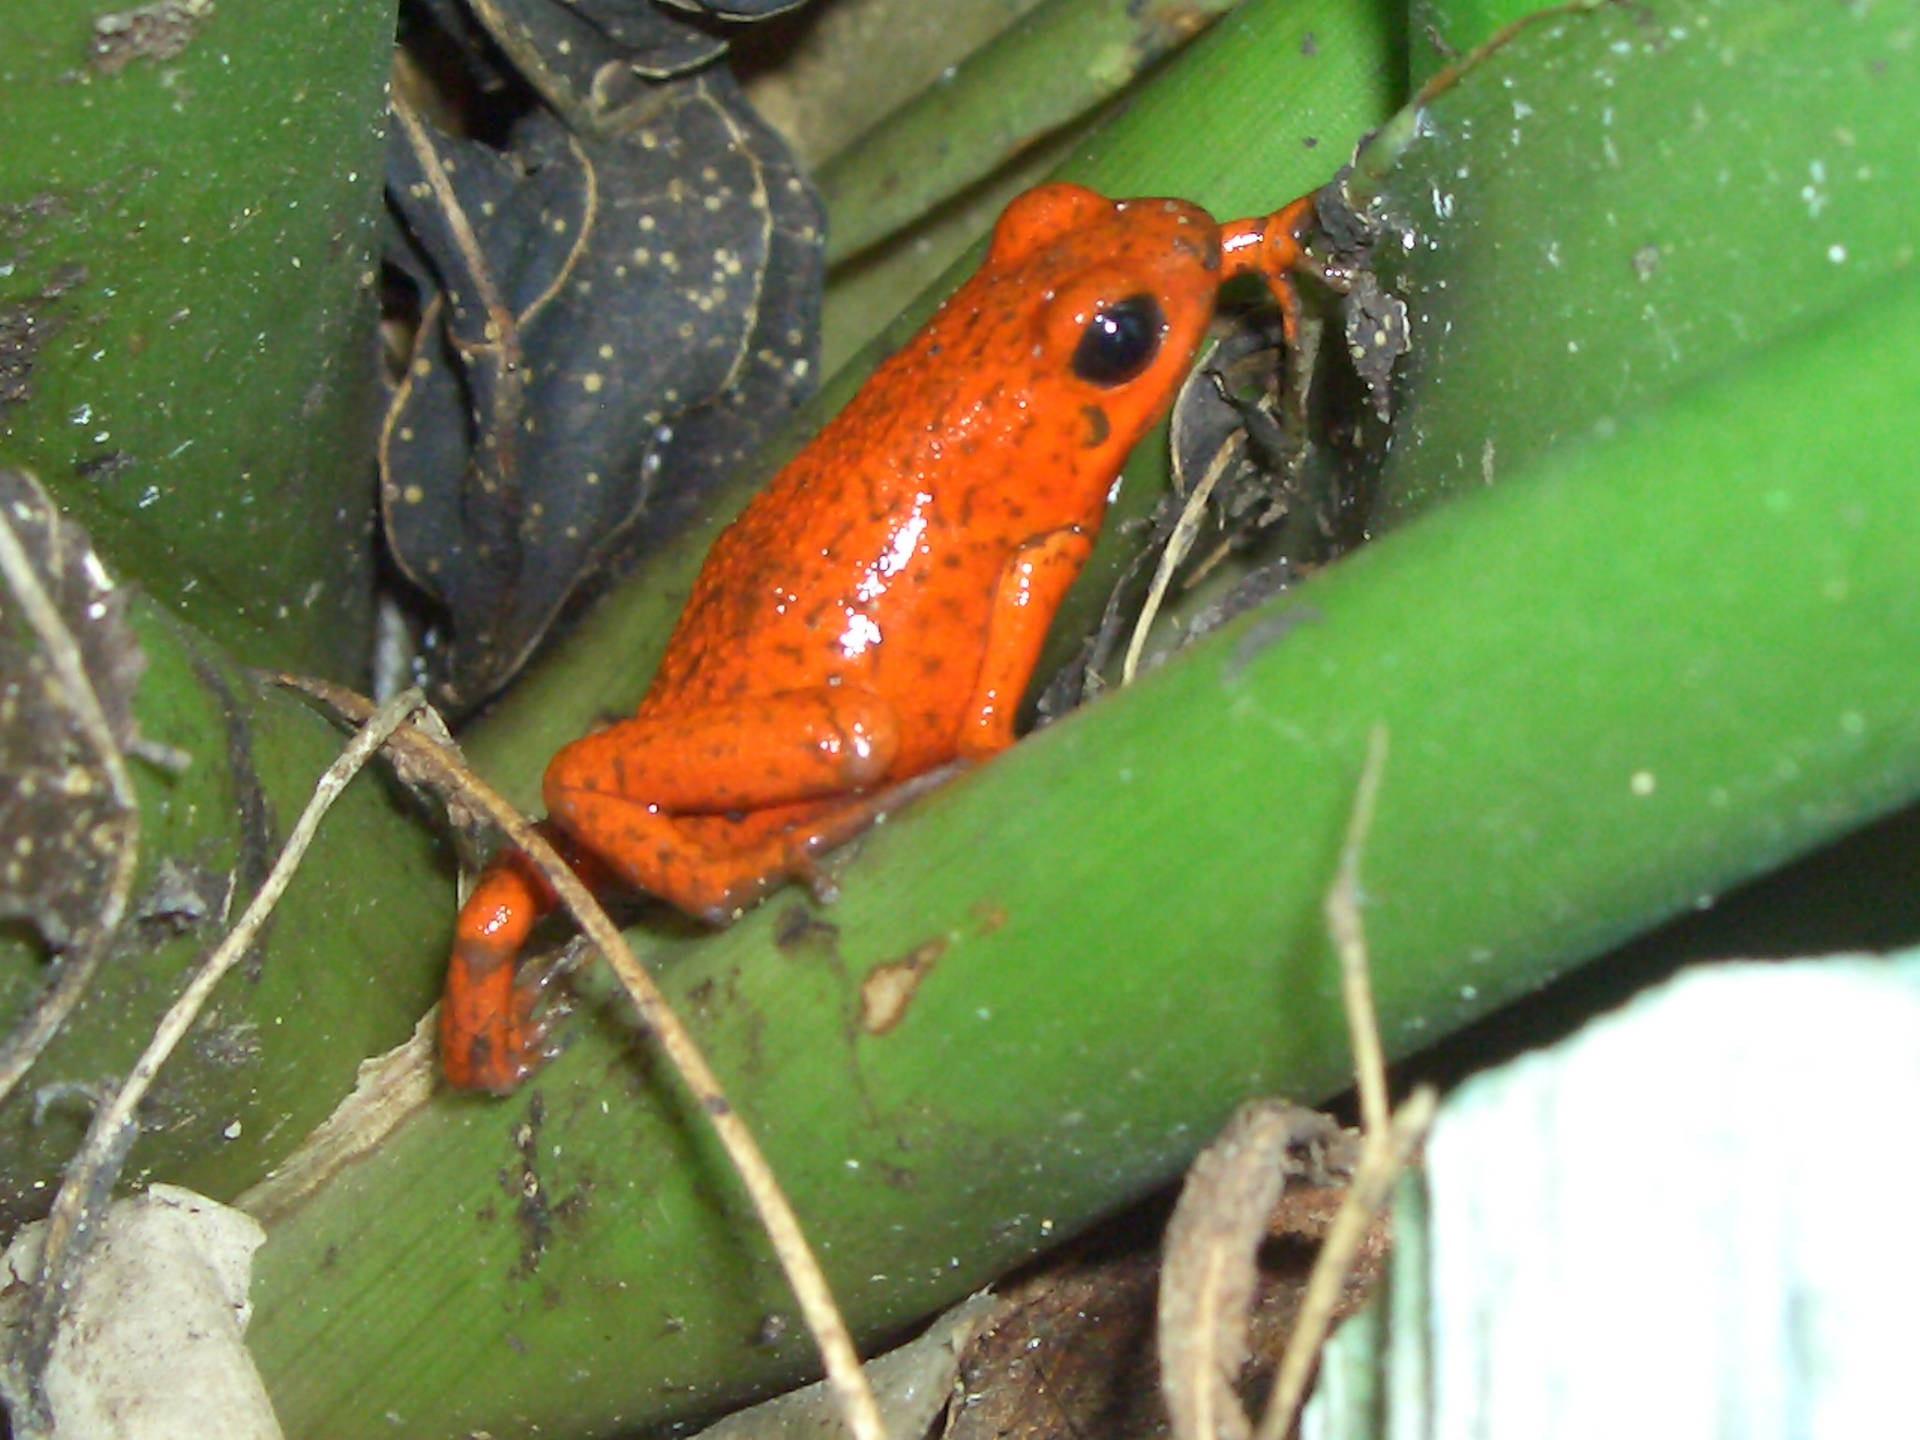 Cute Frog With Bright Orange Skin Wallpaper